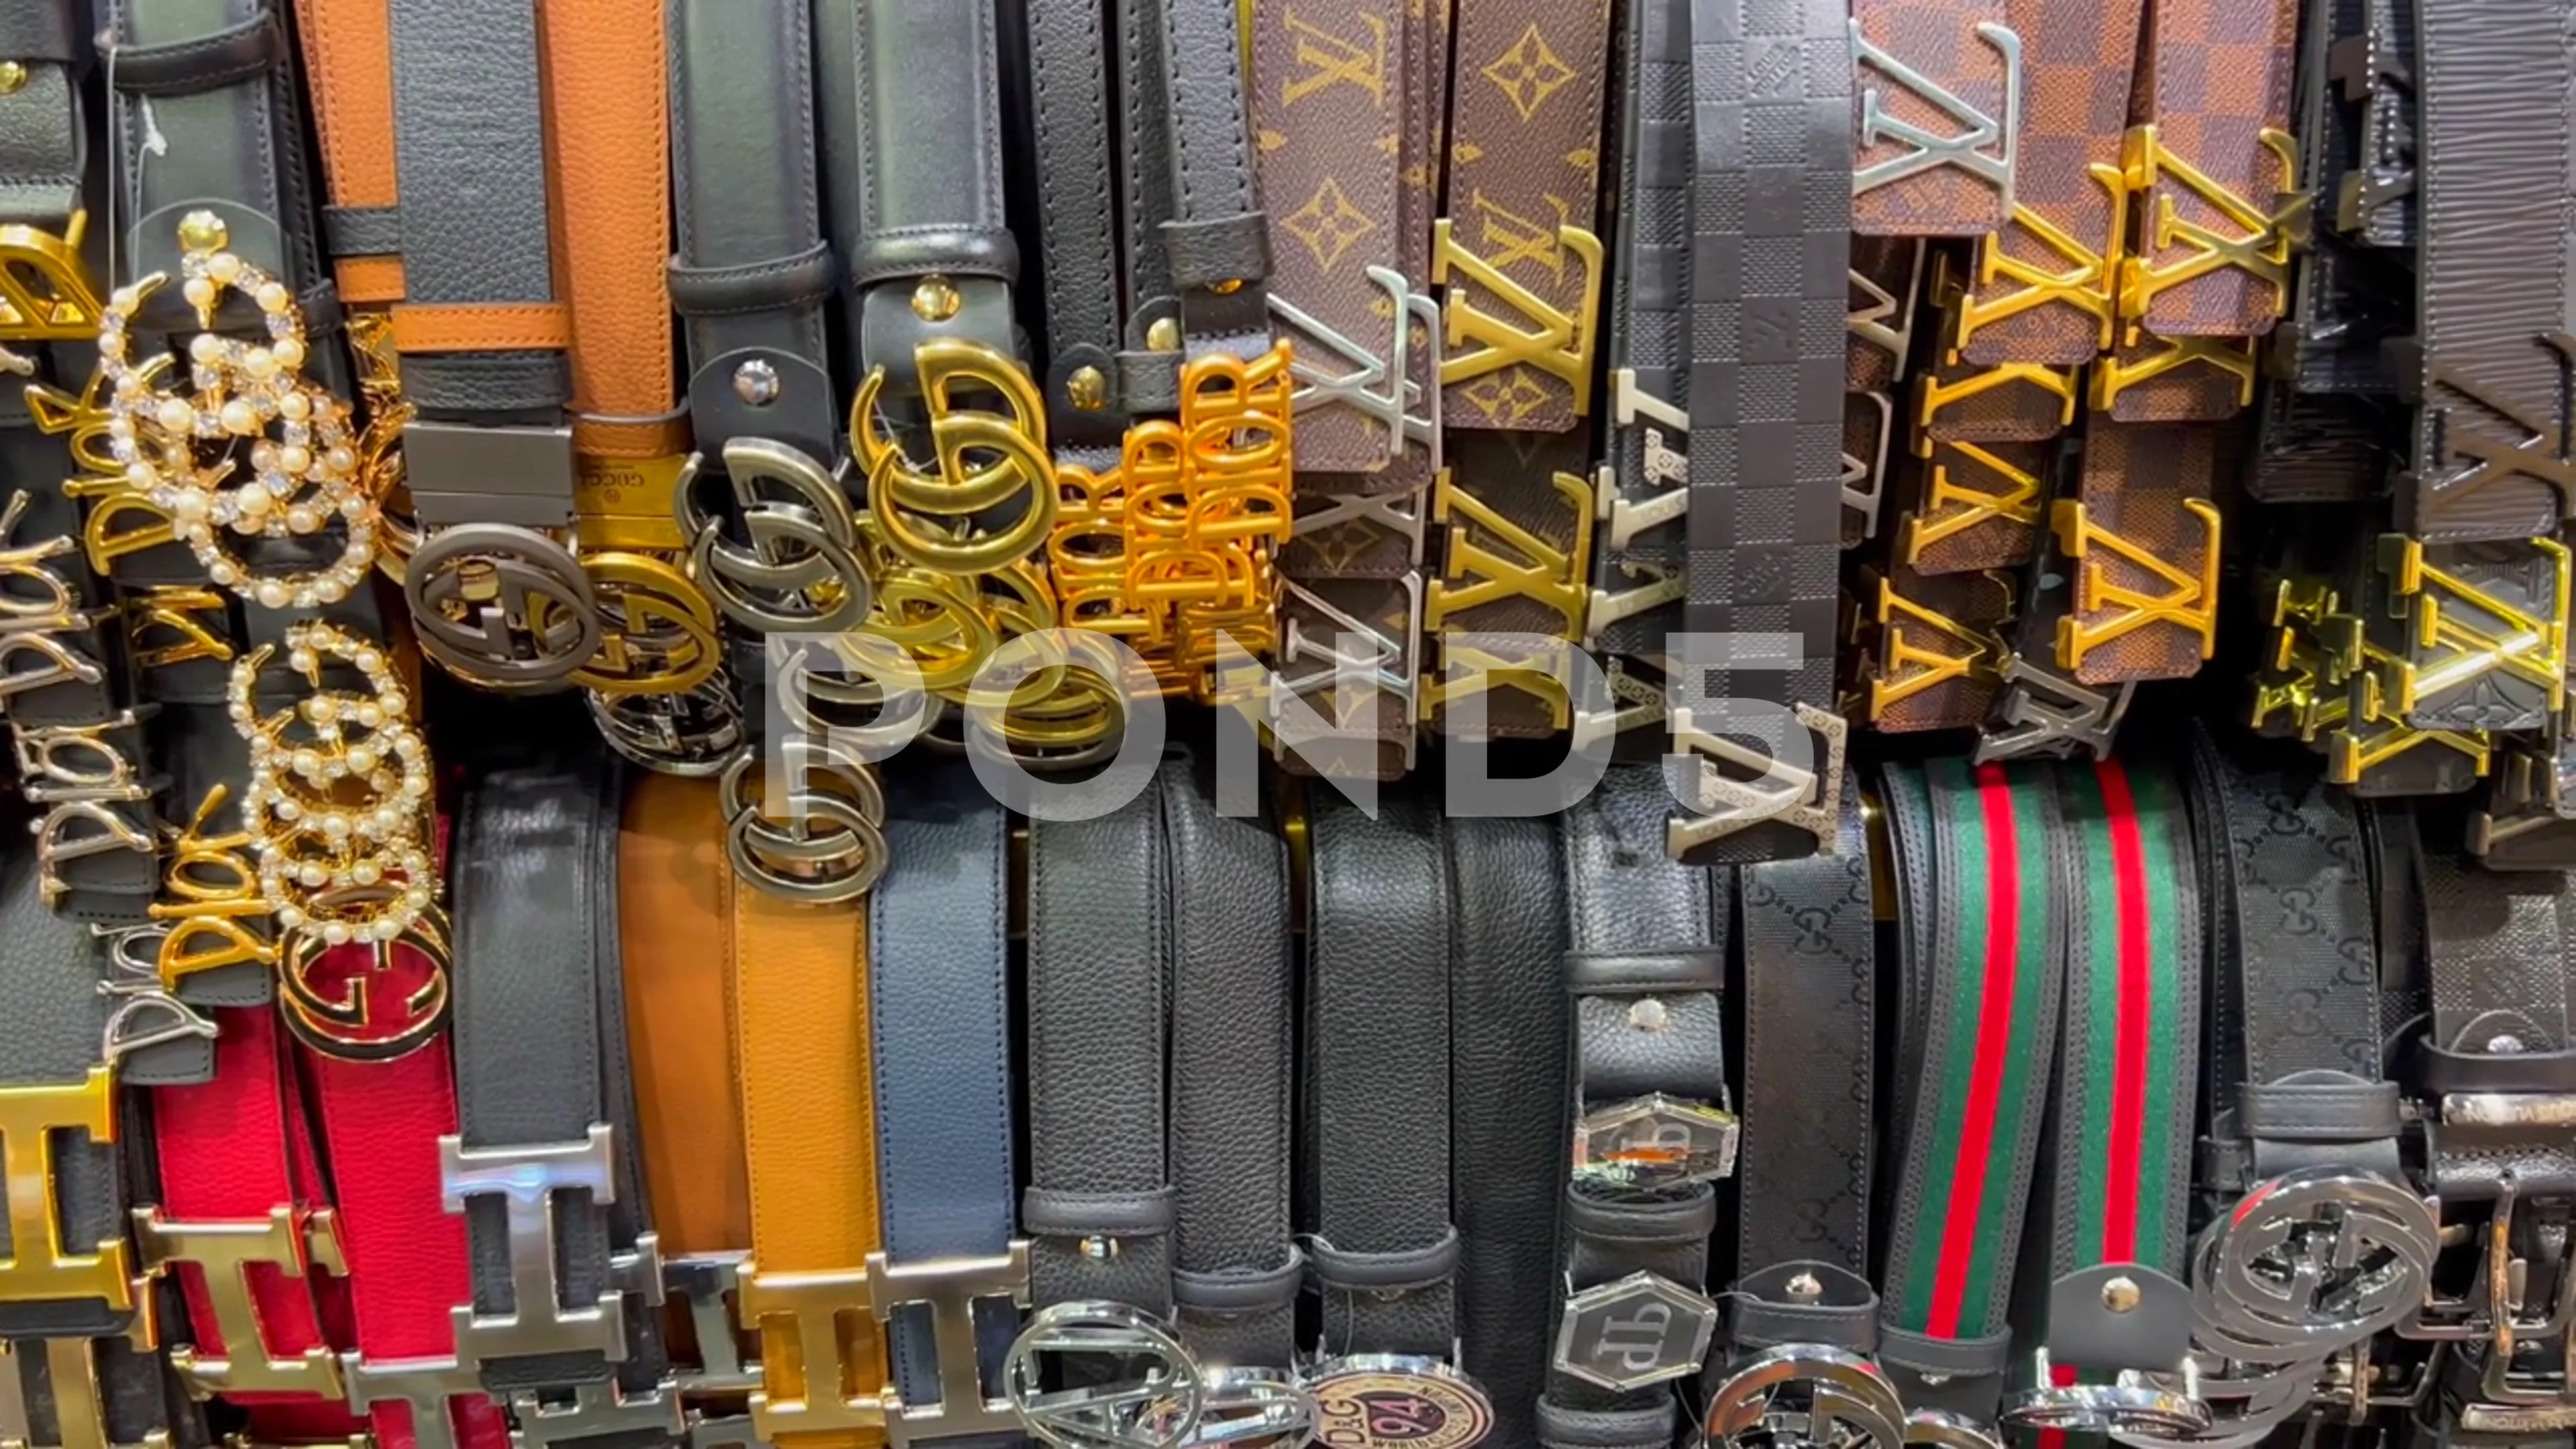 High quality fake designer belts hanging, Stock Video